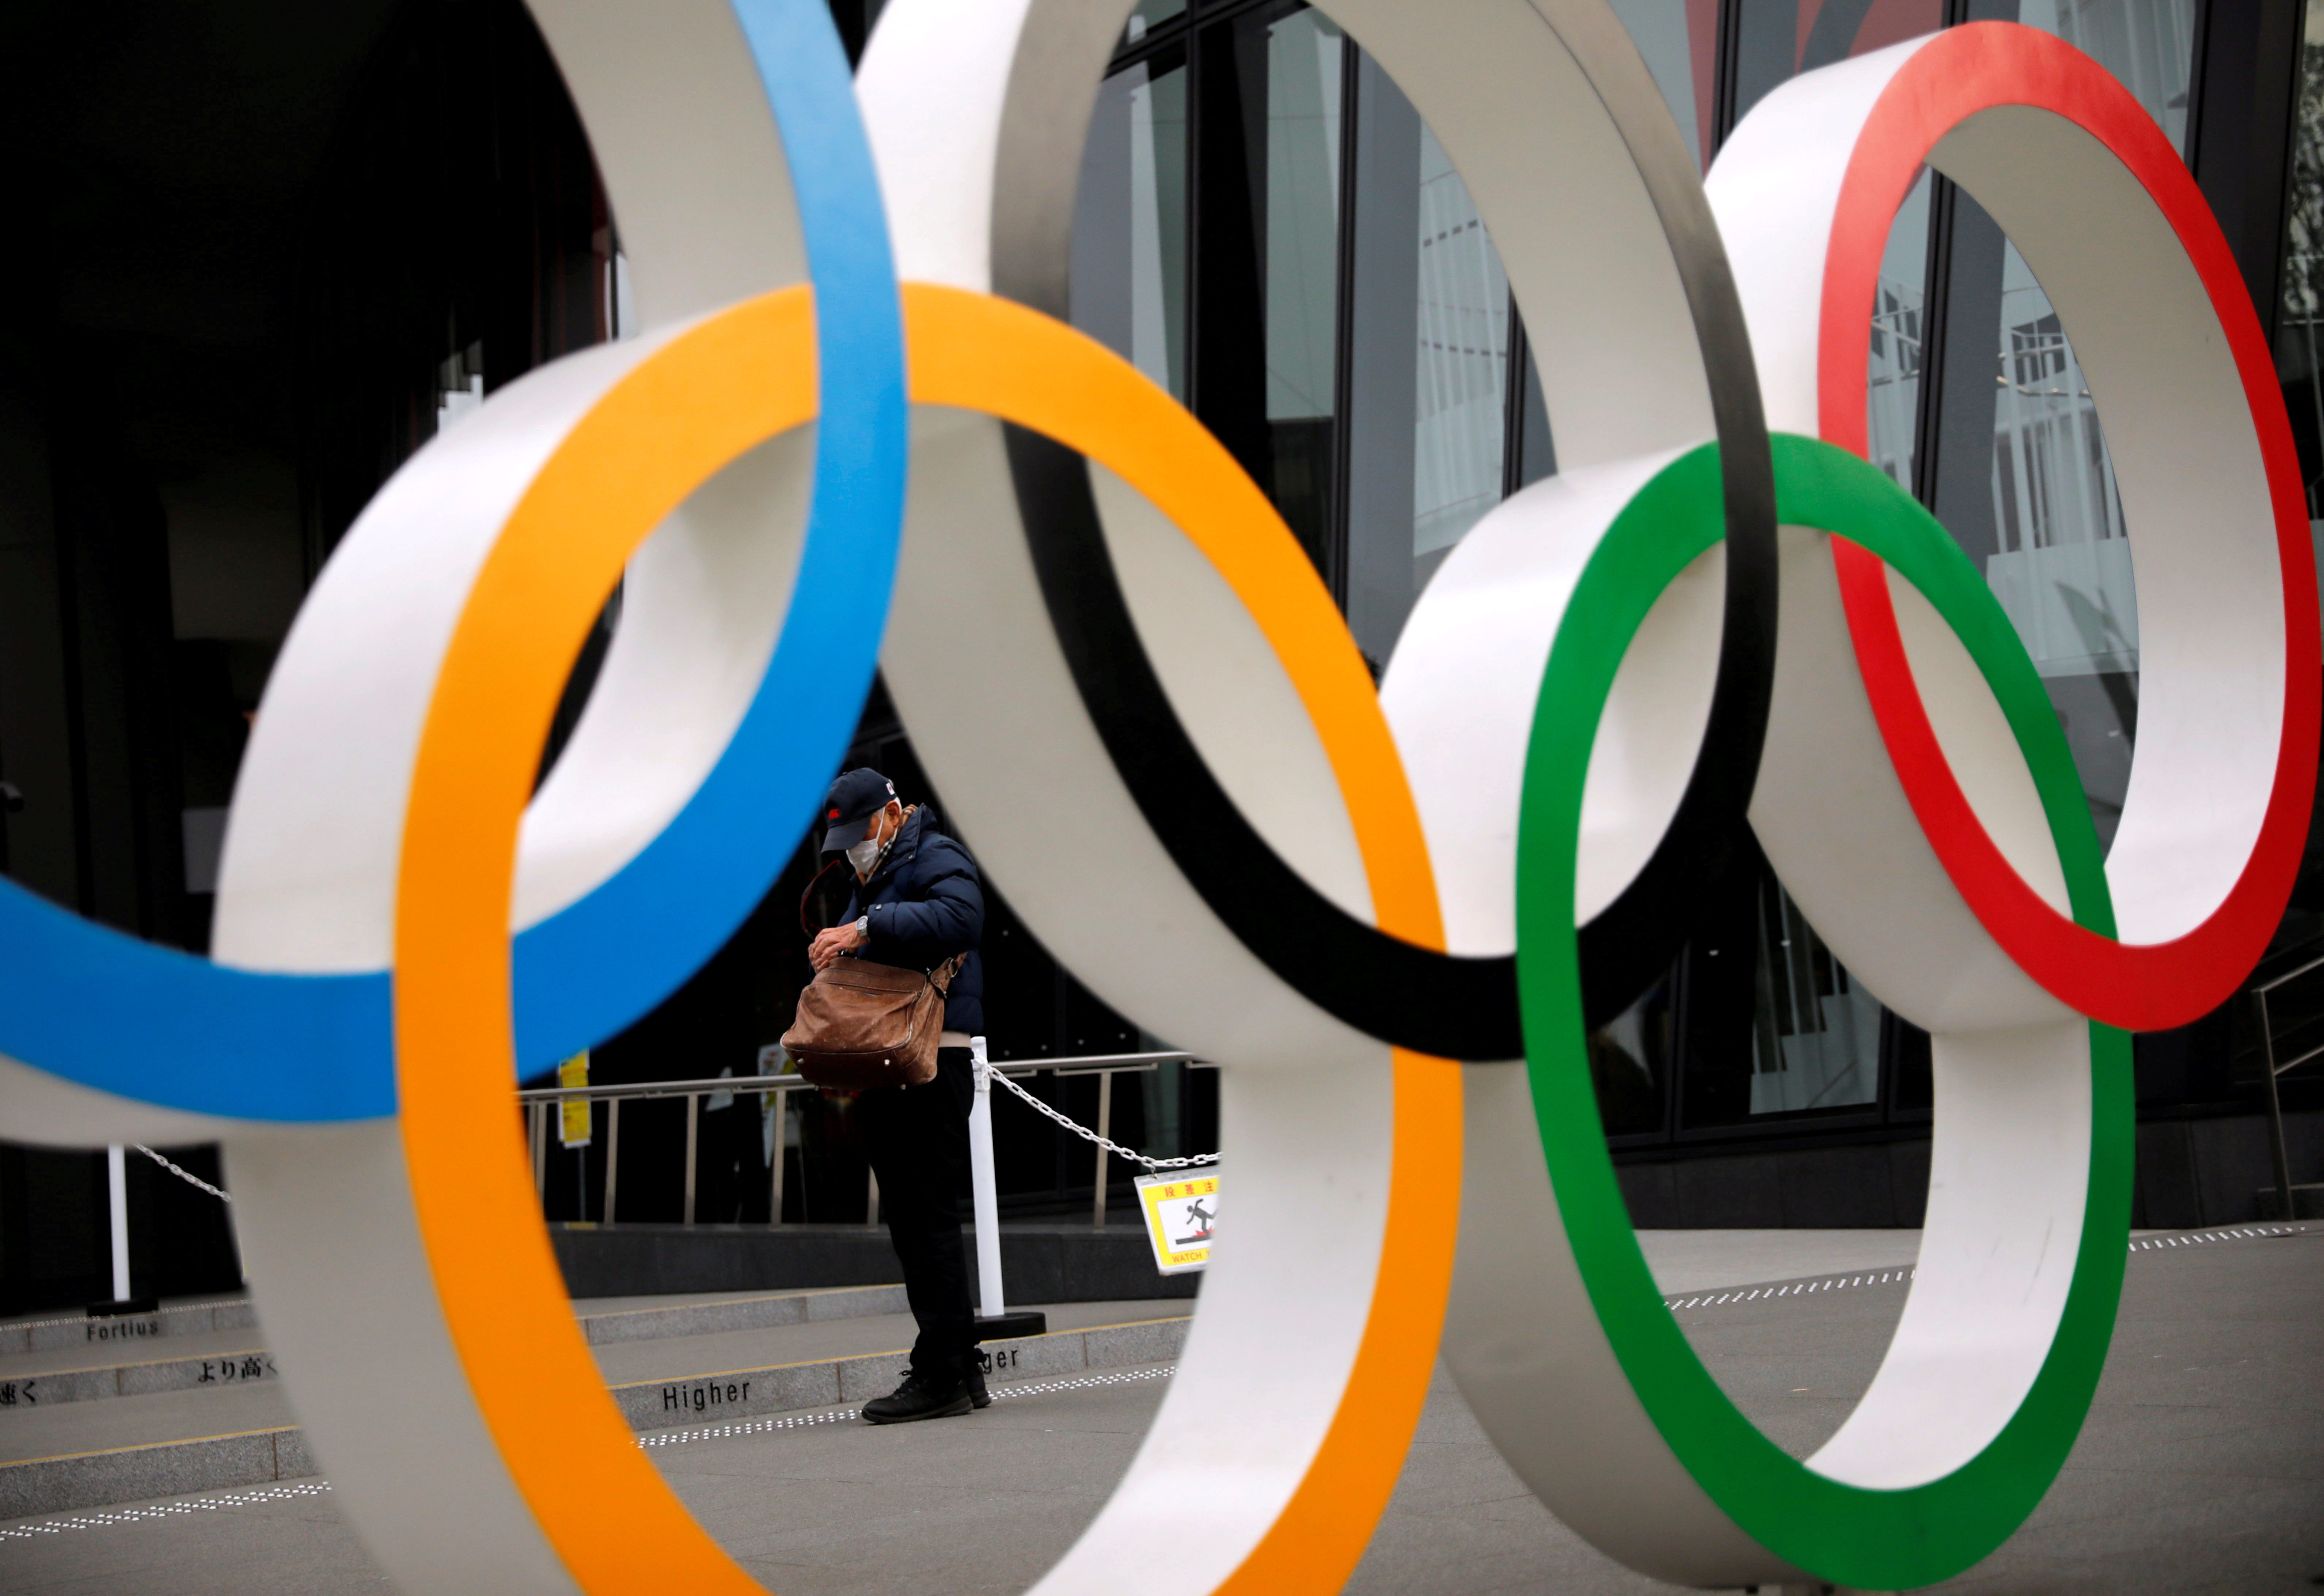 Tokyo Olympics may be too big a gamble, disease expert says